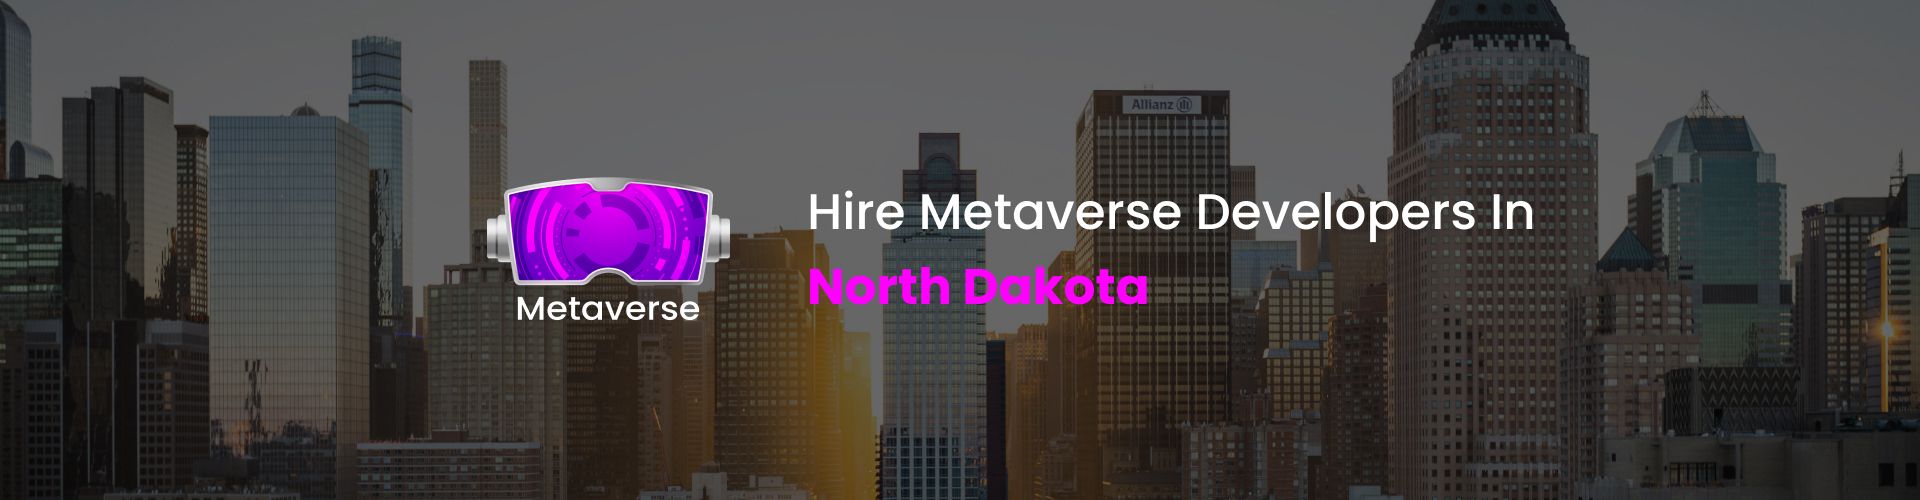 hire metaverse developers in north dakota